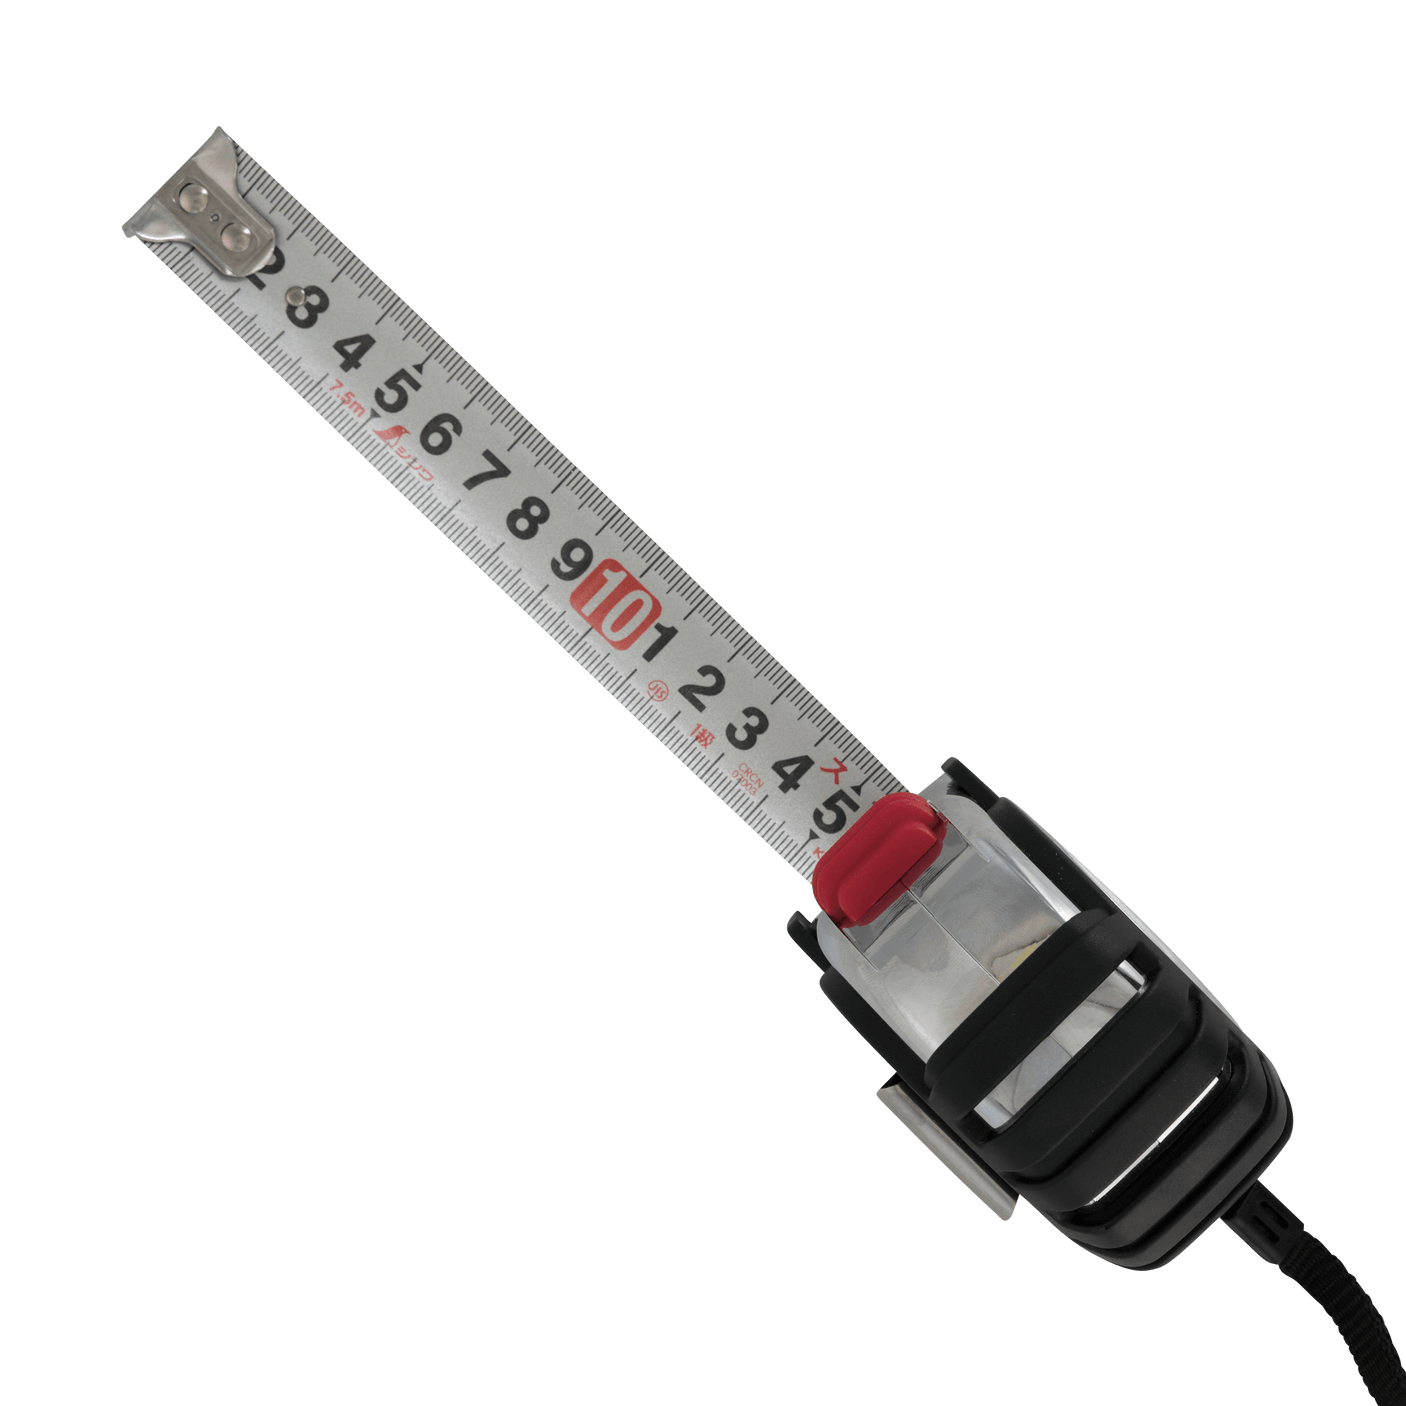 Tough Gear HG 7.5m Measuring Tape (Stainless) - Measuring Tapes - Japanese Tools Australia